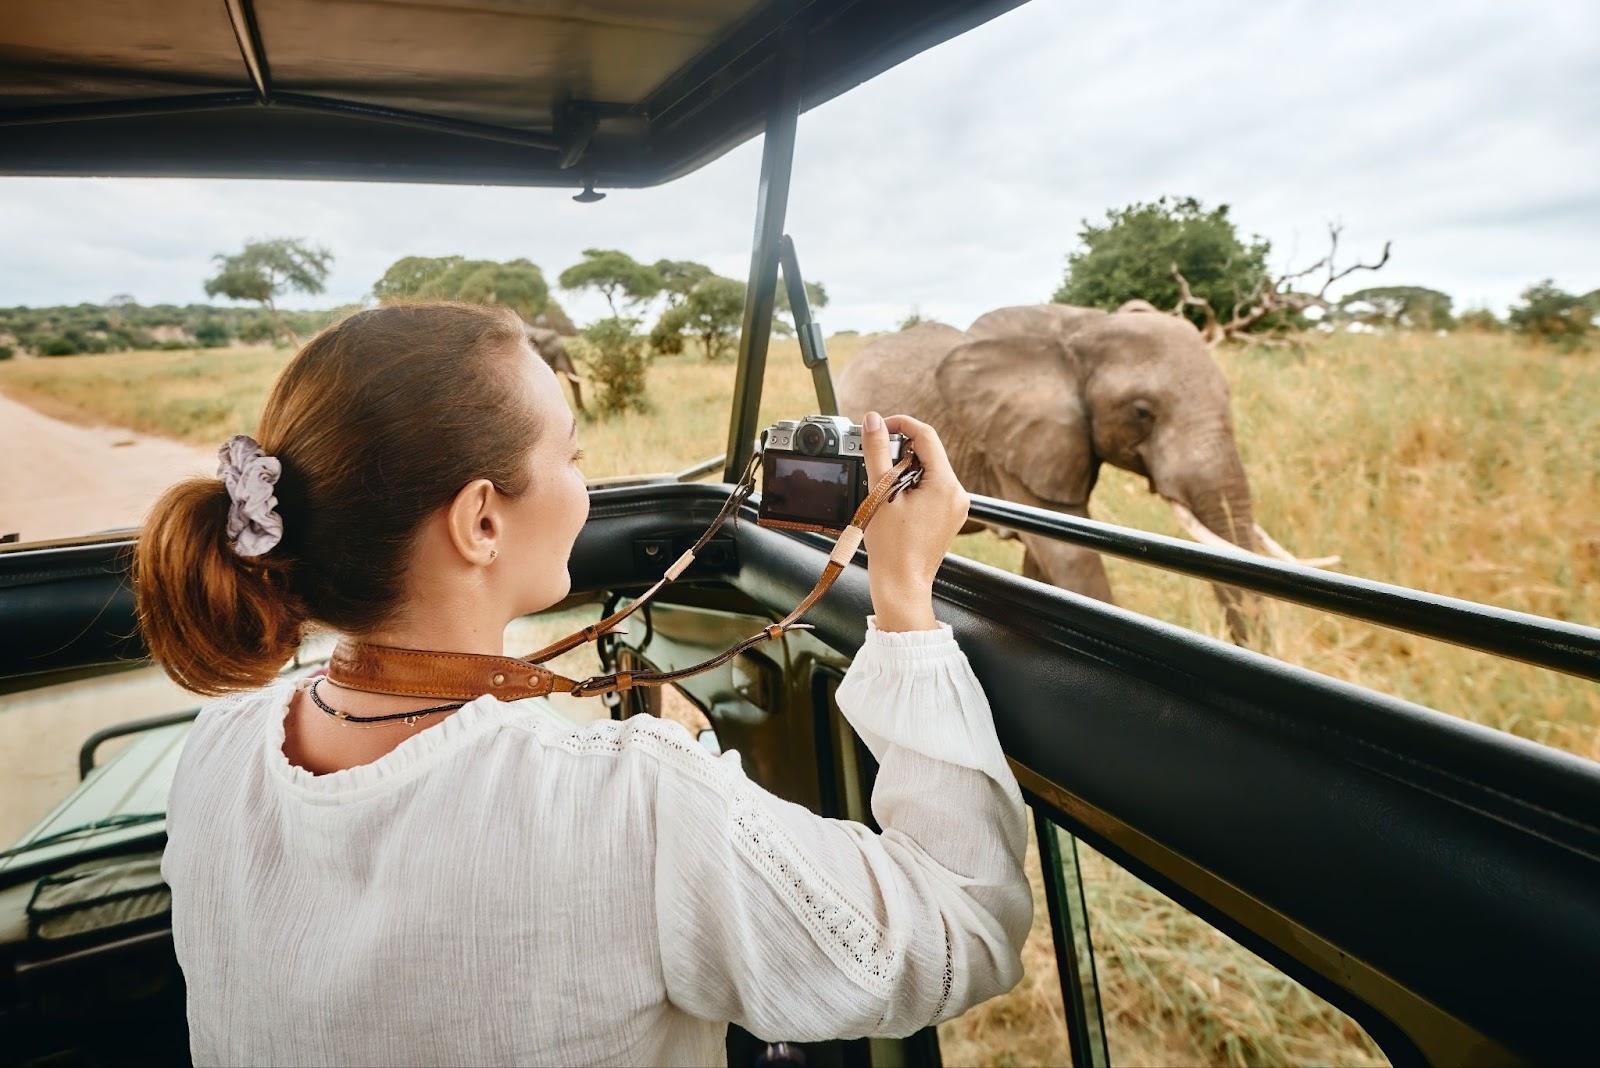 Woman tourist on safari in Kenya, travelling by car, watching elephants in the savannah.